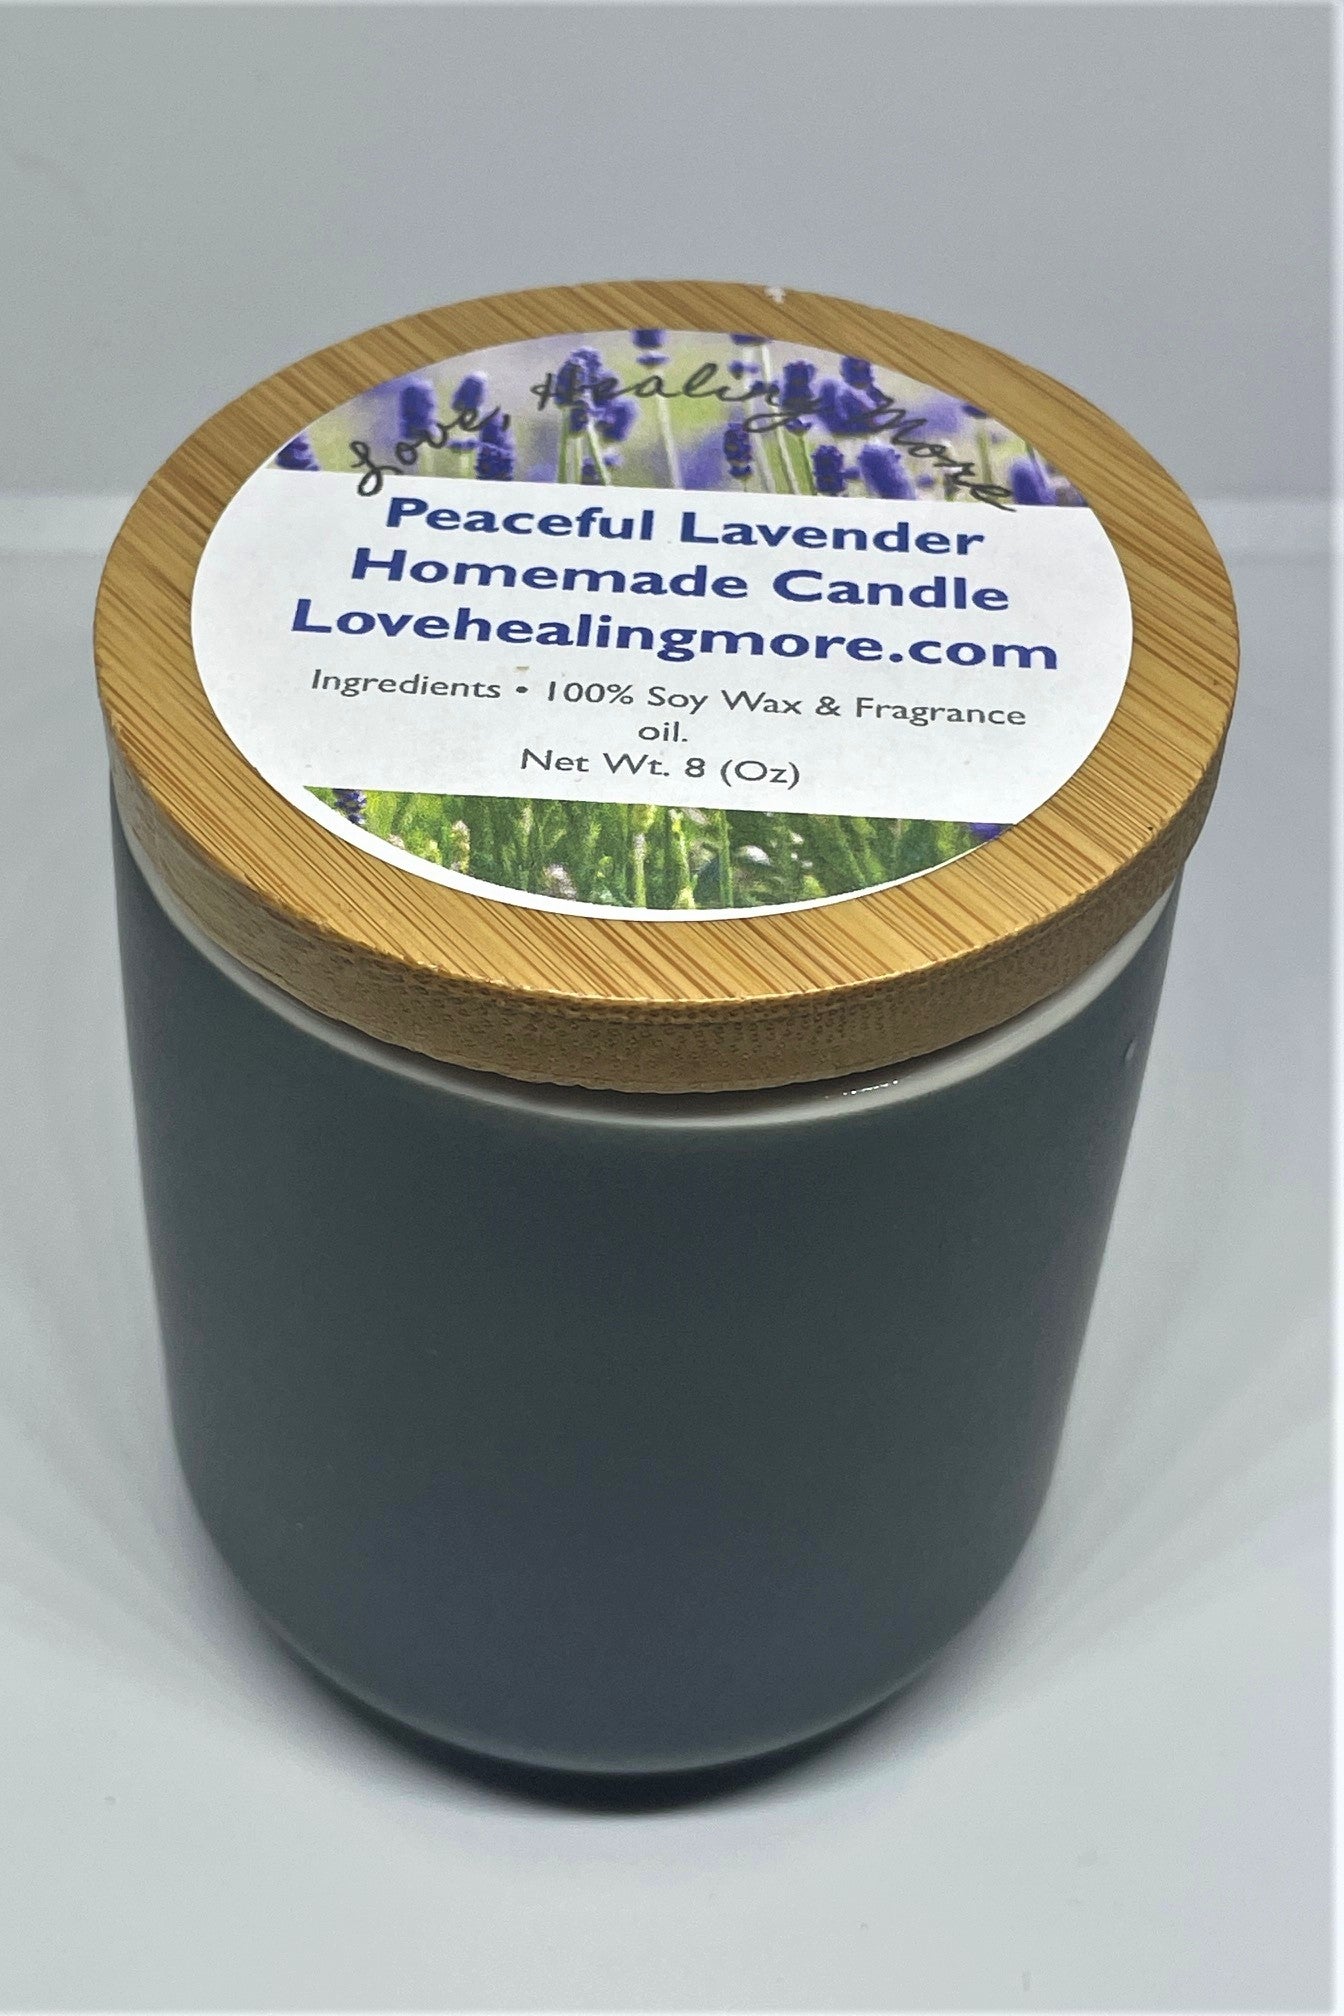 Handmade Peaceful Lavender Fragrance Candle in Ceramic Jar